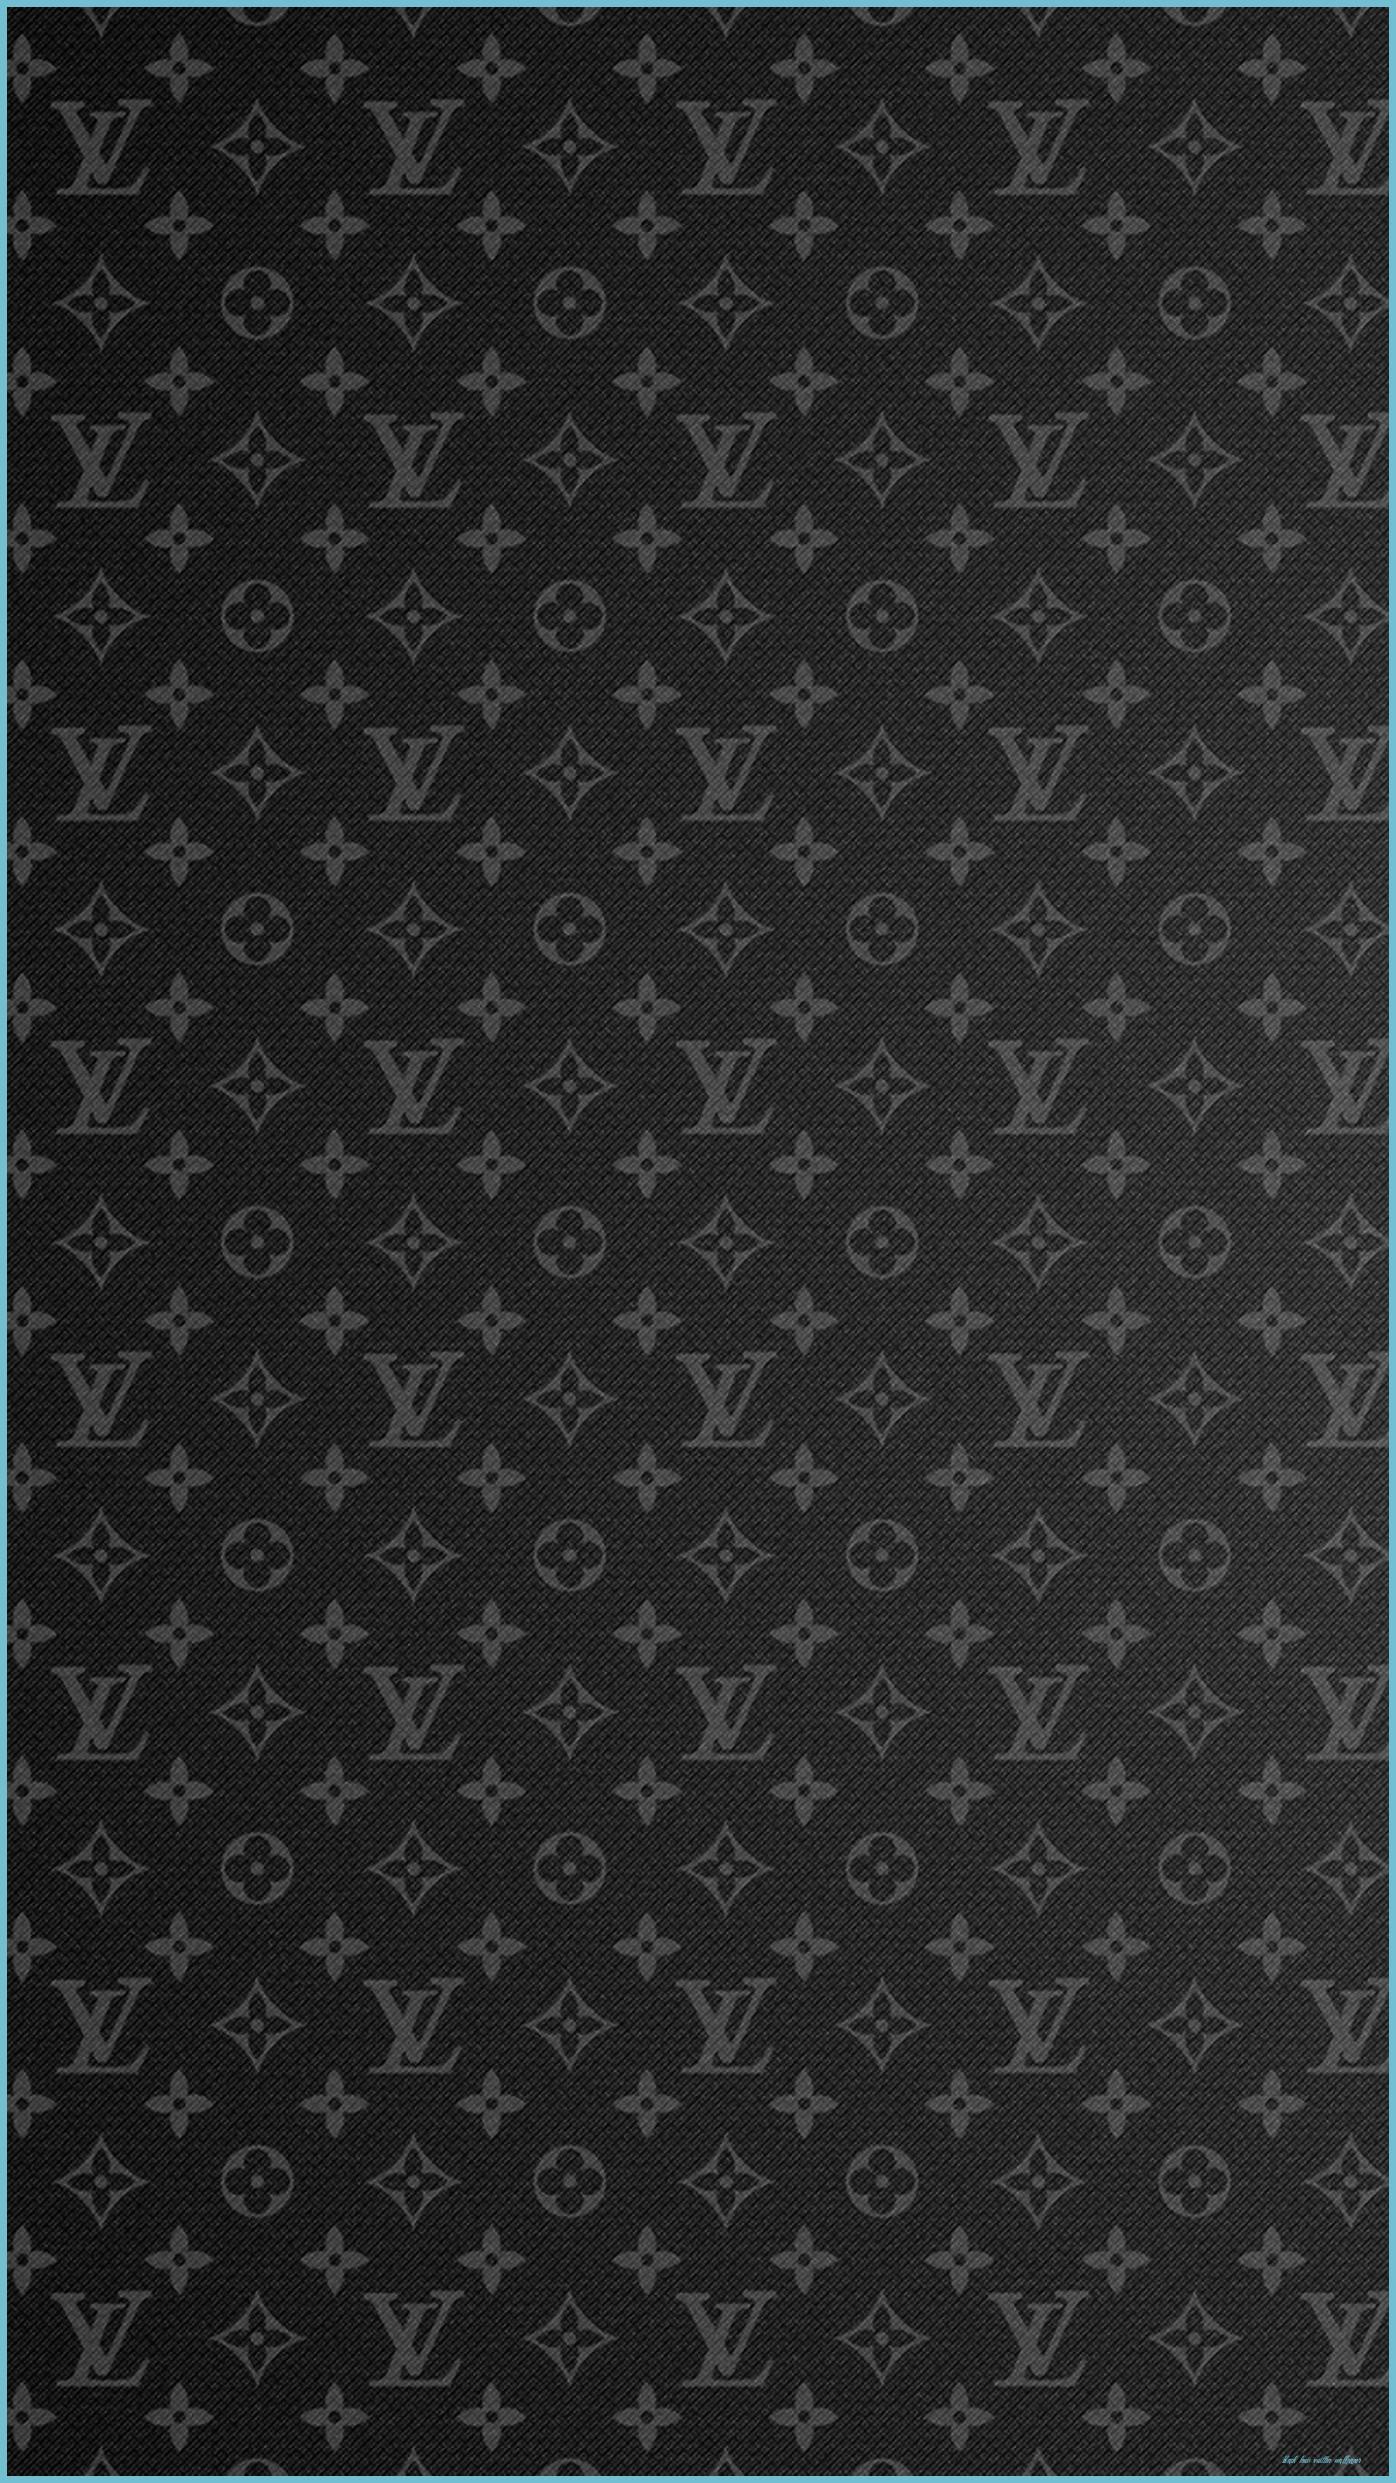 Brown Louis Vuitton Wallpaper 9  Louis vuitton iphone wallpaper, Iphone  wallpaper, Hypebeast wallpaper